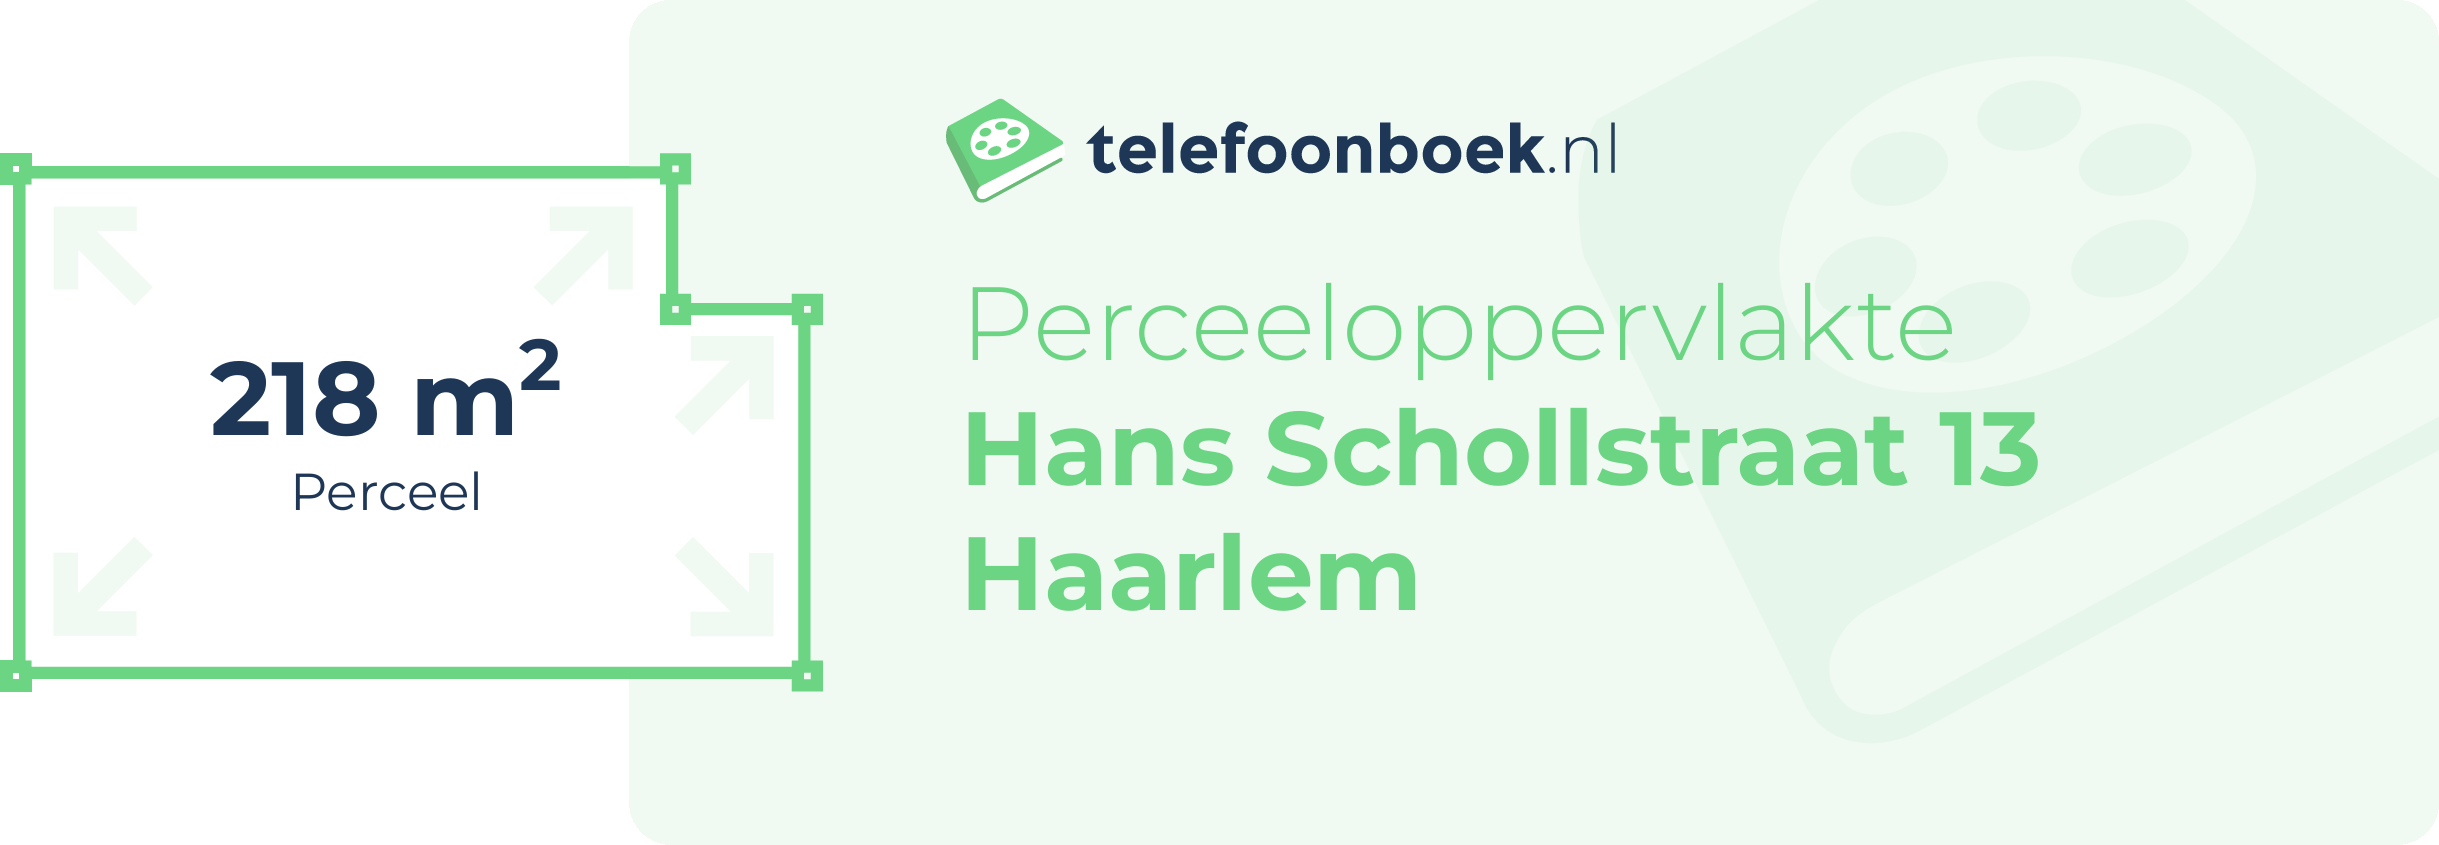 Perceeloppervlakte Hans Schollstraat 13 Haarlem